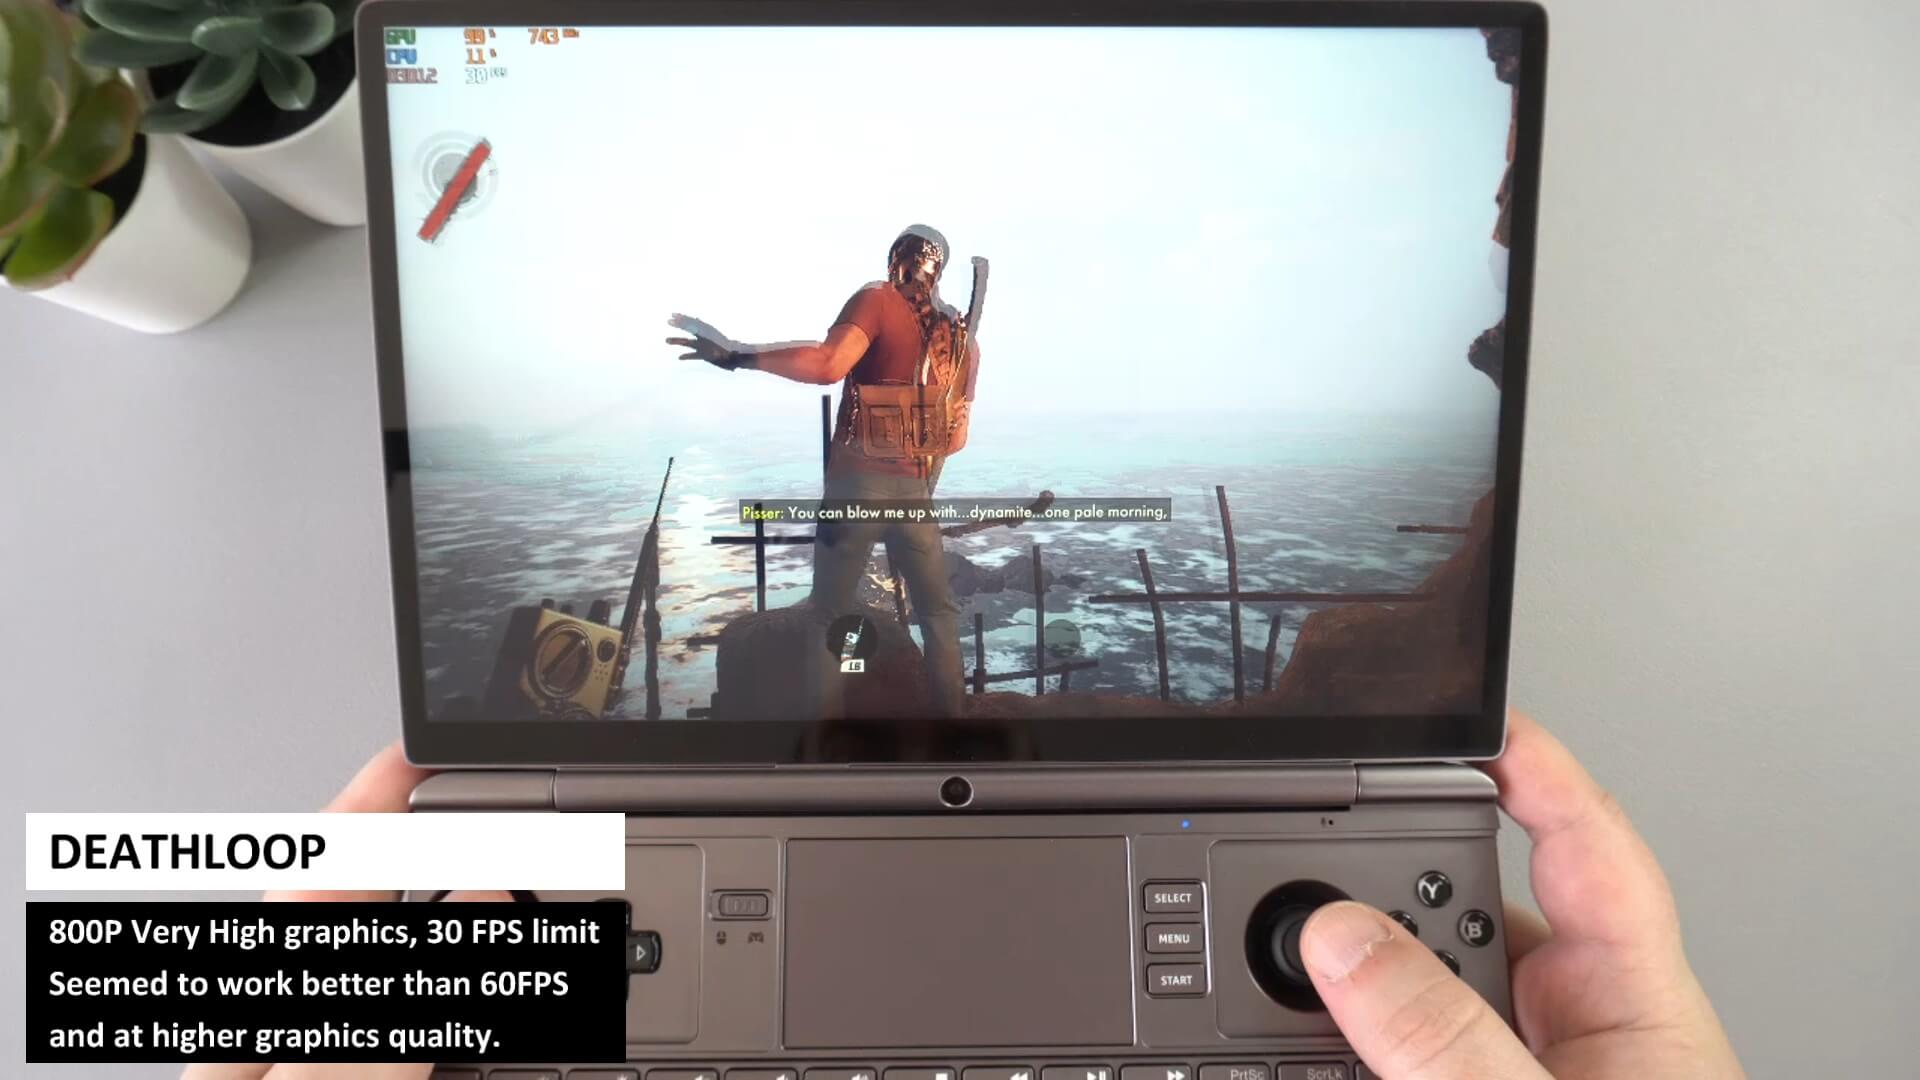 GPD WIN MAX 2 Review - AMD Ryzen 7 6800U AAA gaming mini laptop